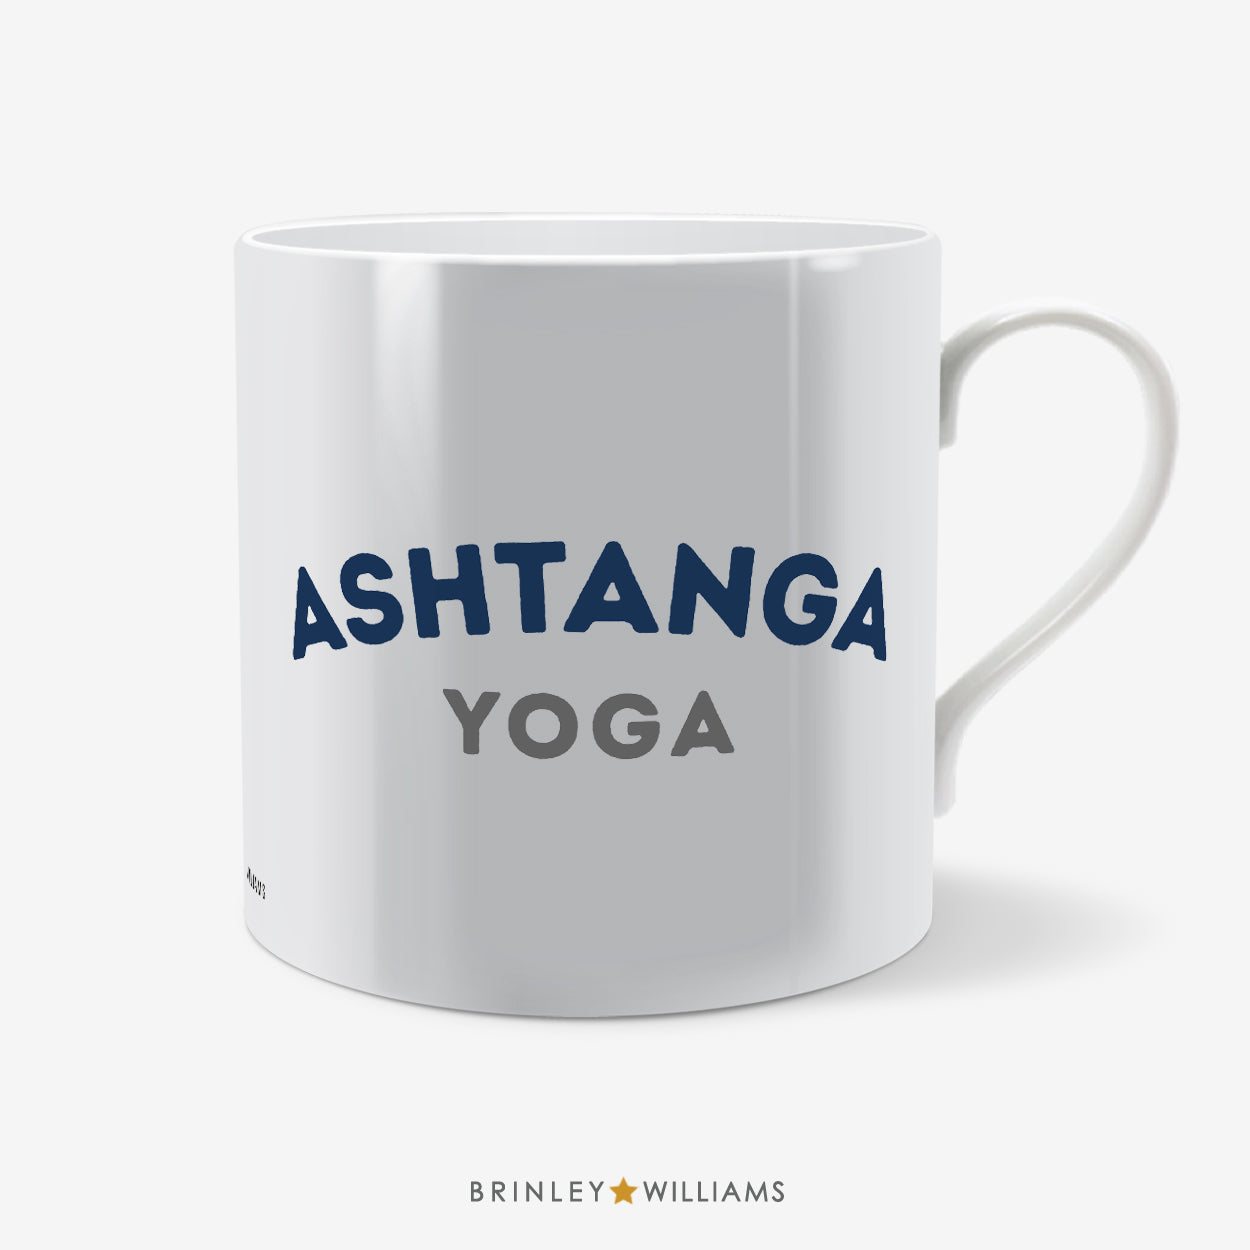 Ashtanga Yoga Mug - Navy